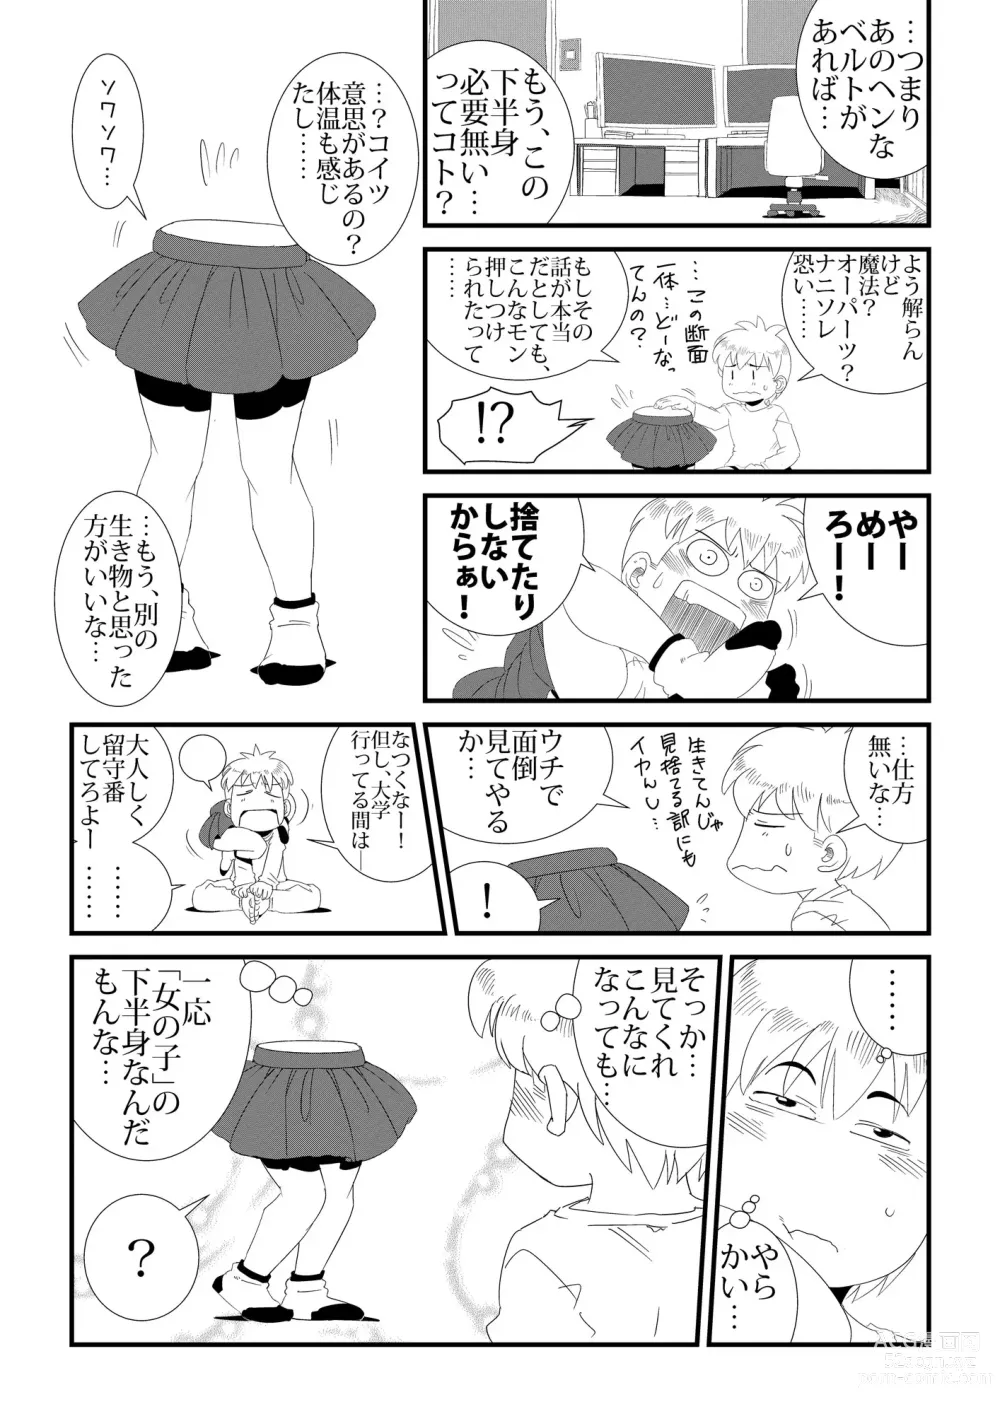 Page 2 of doujinshi Hanbunko